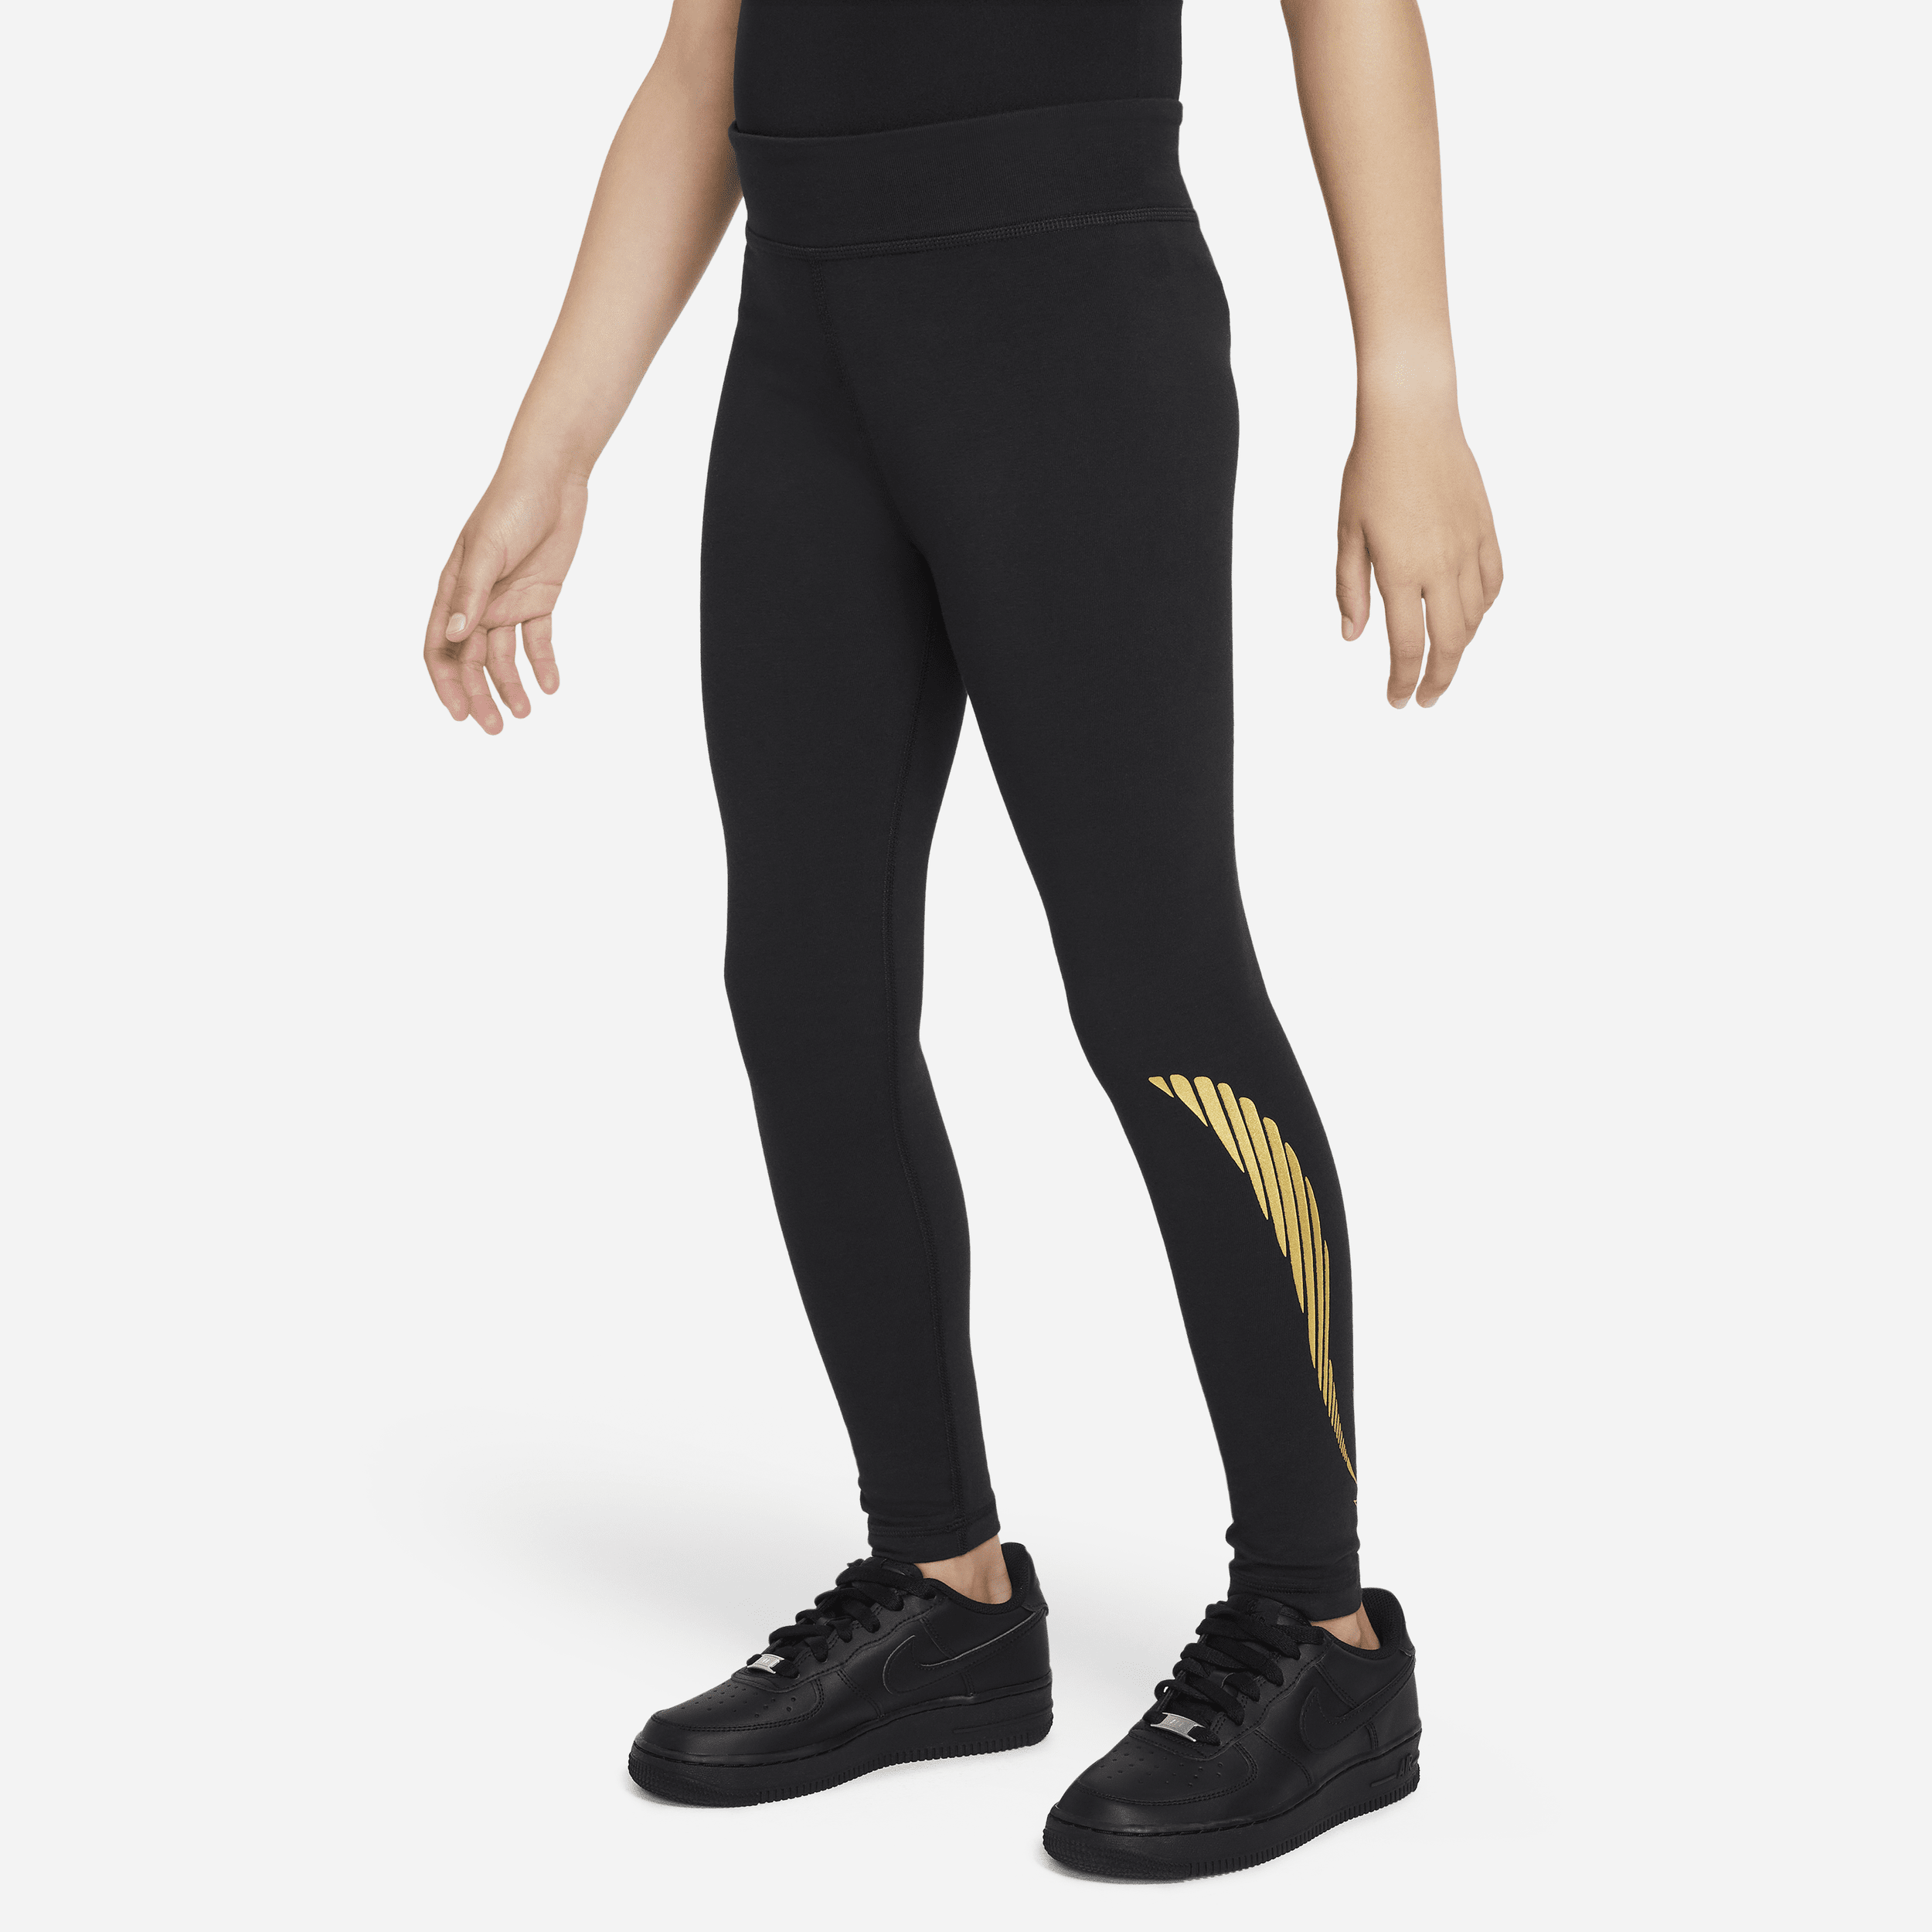 Nike Sportswear Favorites legging met hoge taille voor meisjes - Zwart